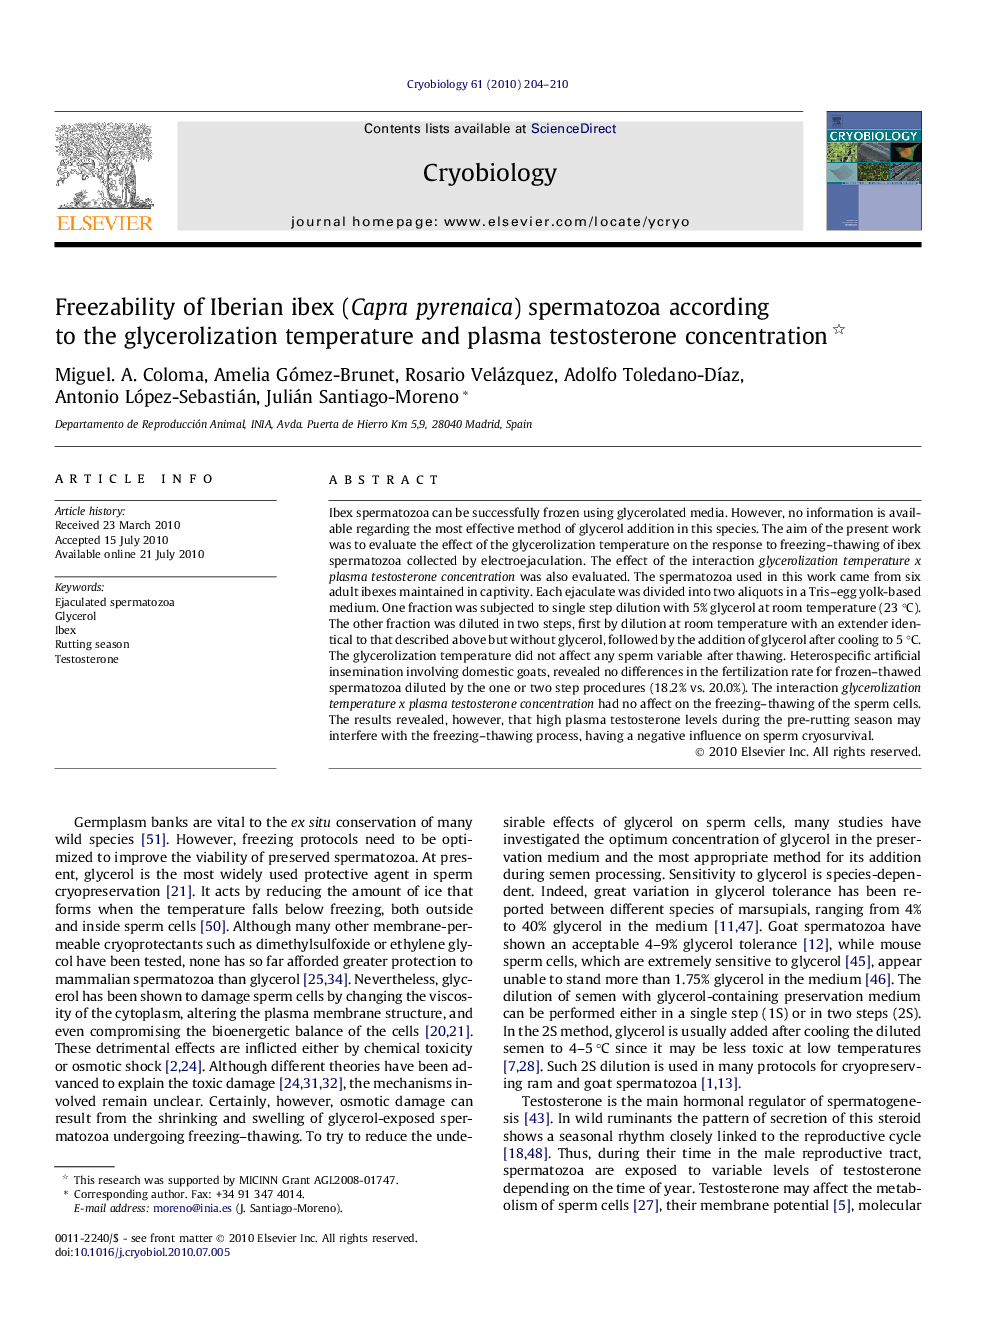 Freezability of Iberian ibex (Capra pyrenaica) spermatozoa according to the glycerolization temperature and plasma testosterone concentration 